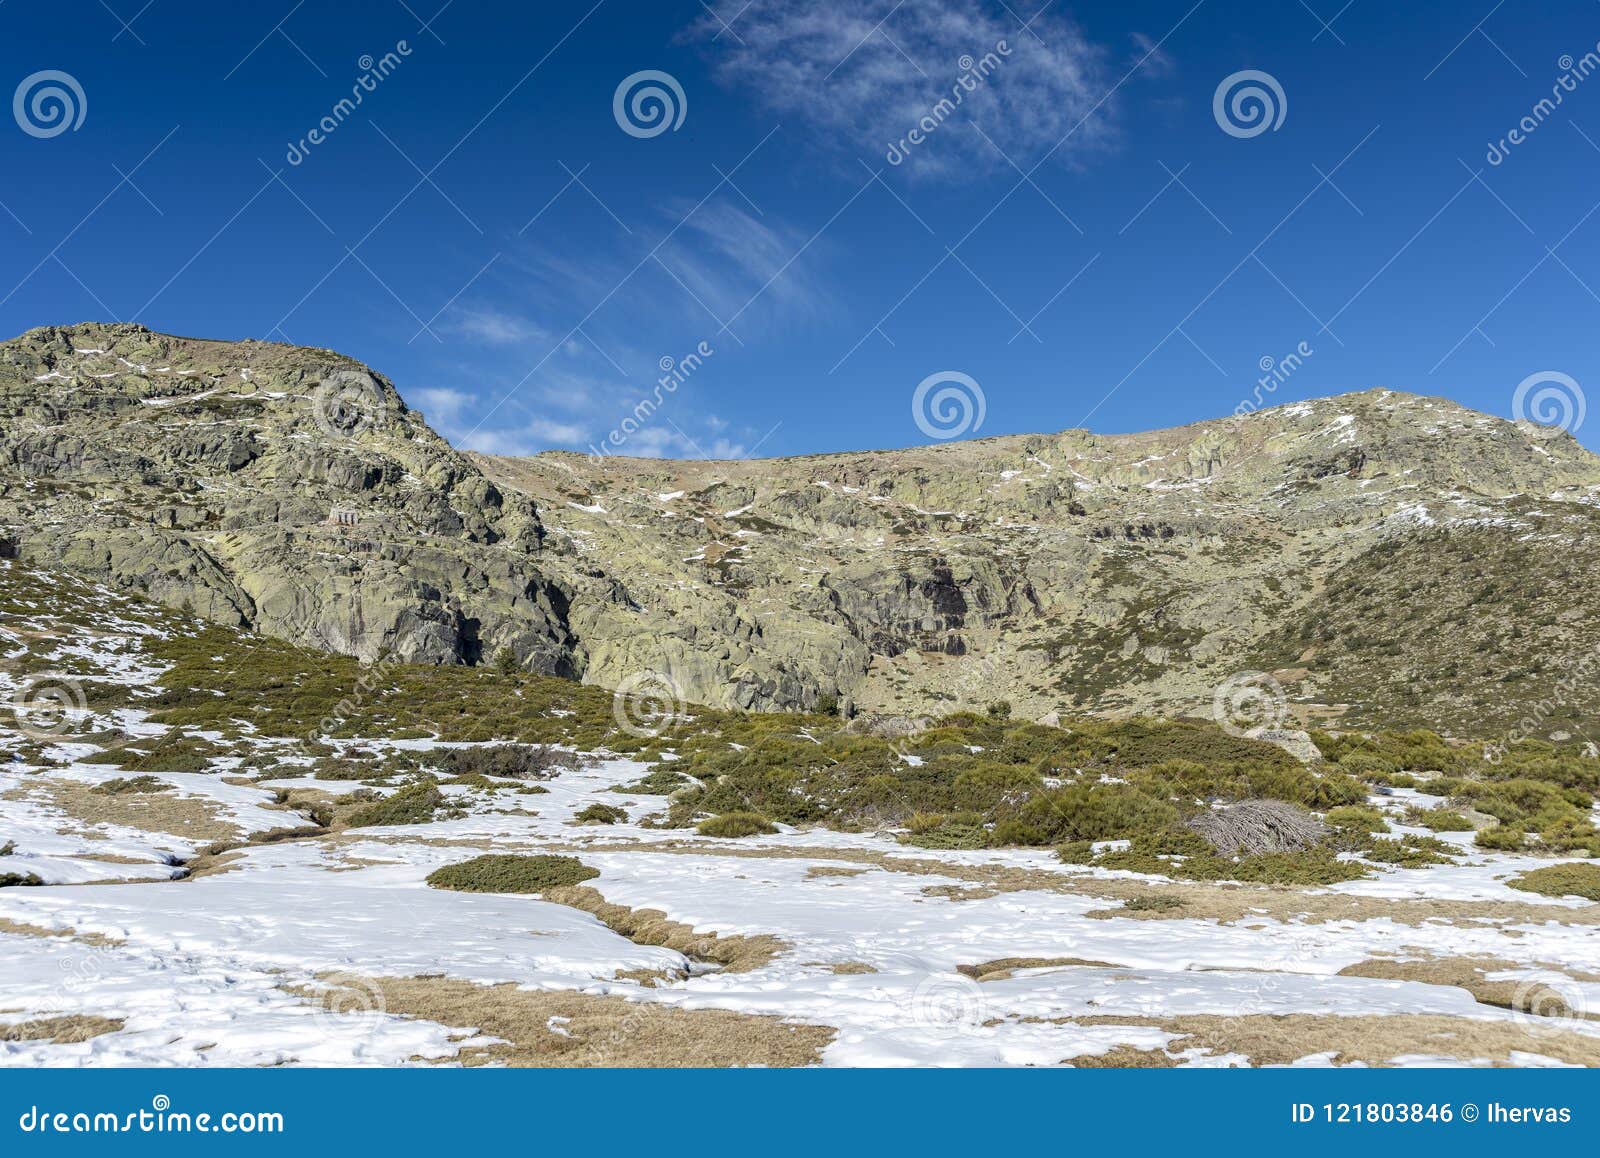 views of the penalara massif